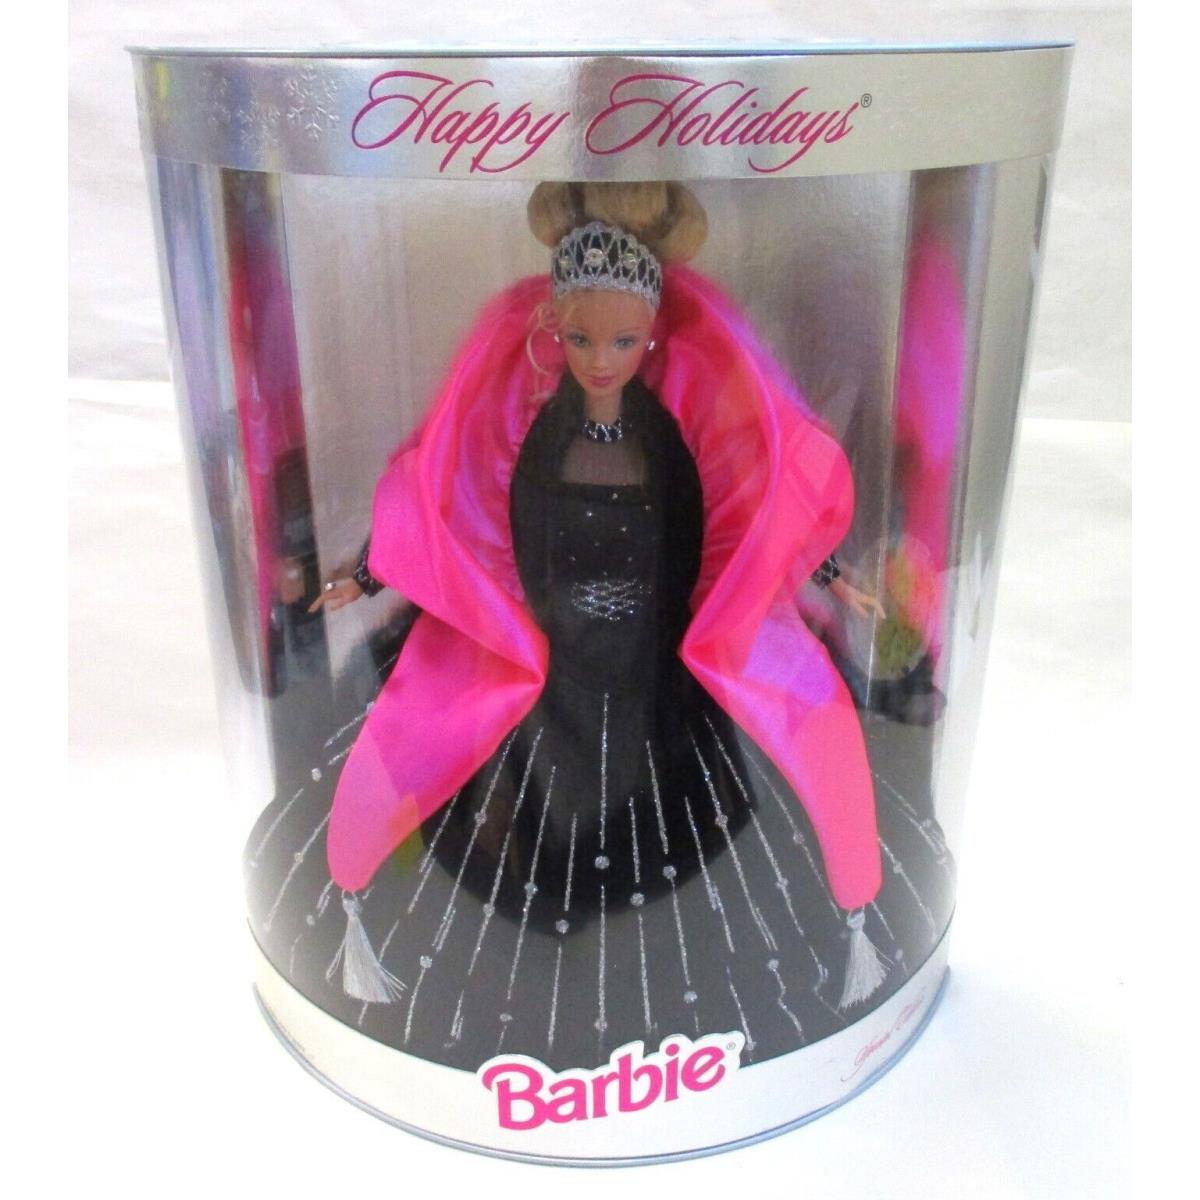 1998 Mattel Happy Holidays Barbie 20200 Rare Error Box